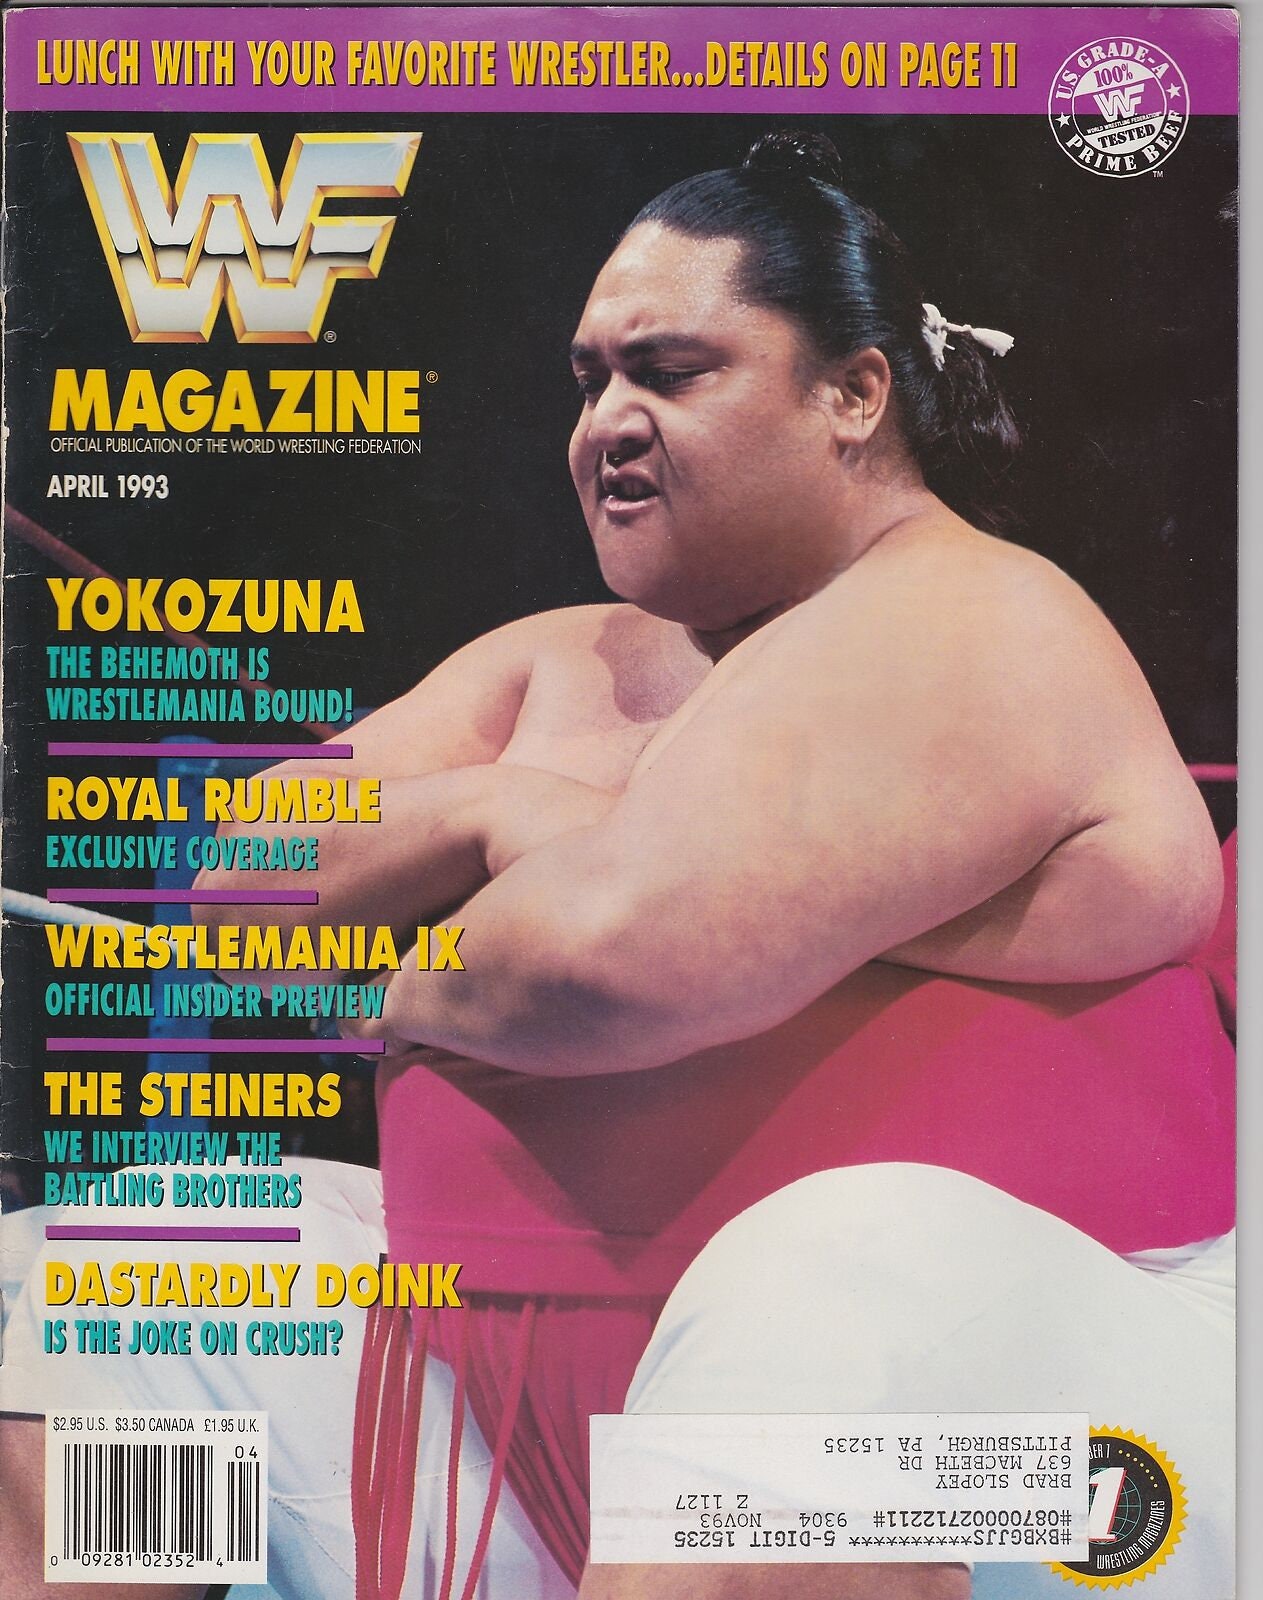 Wwf magazine covers